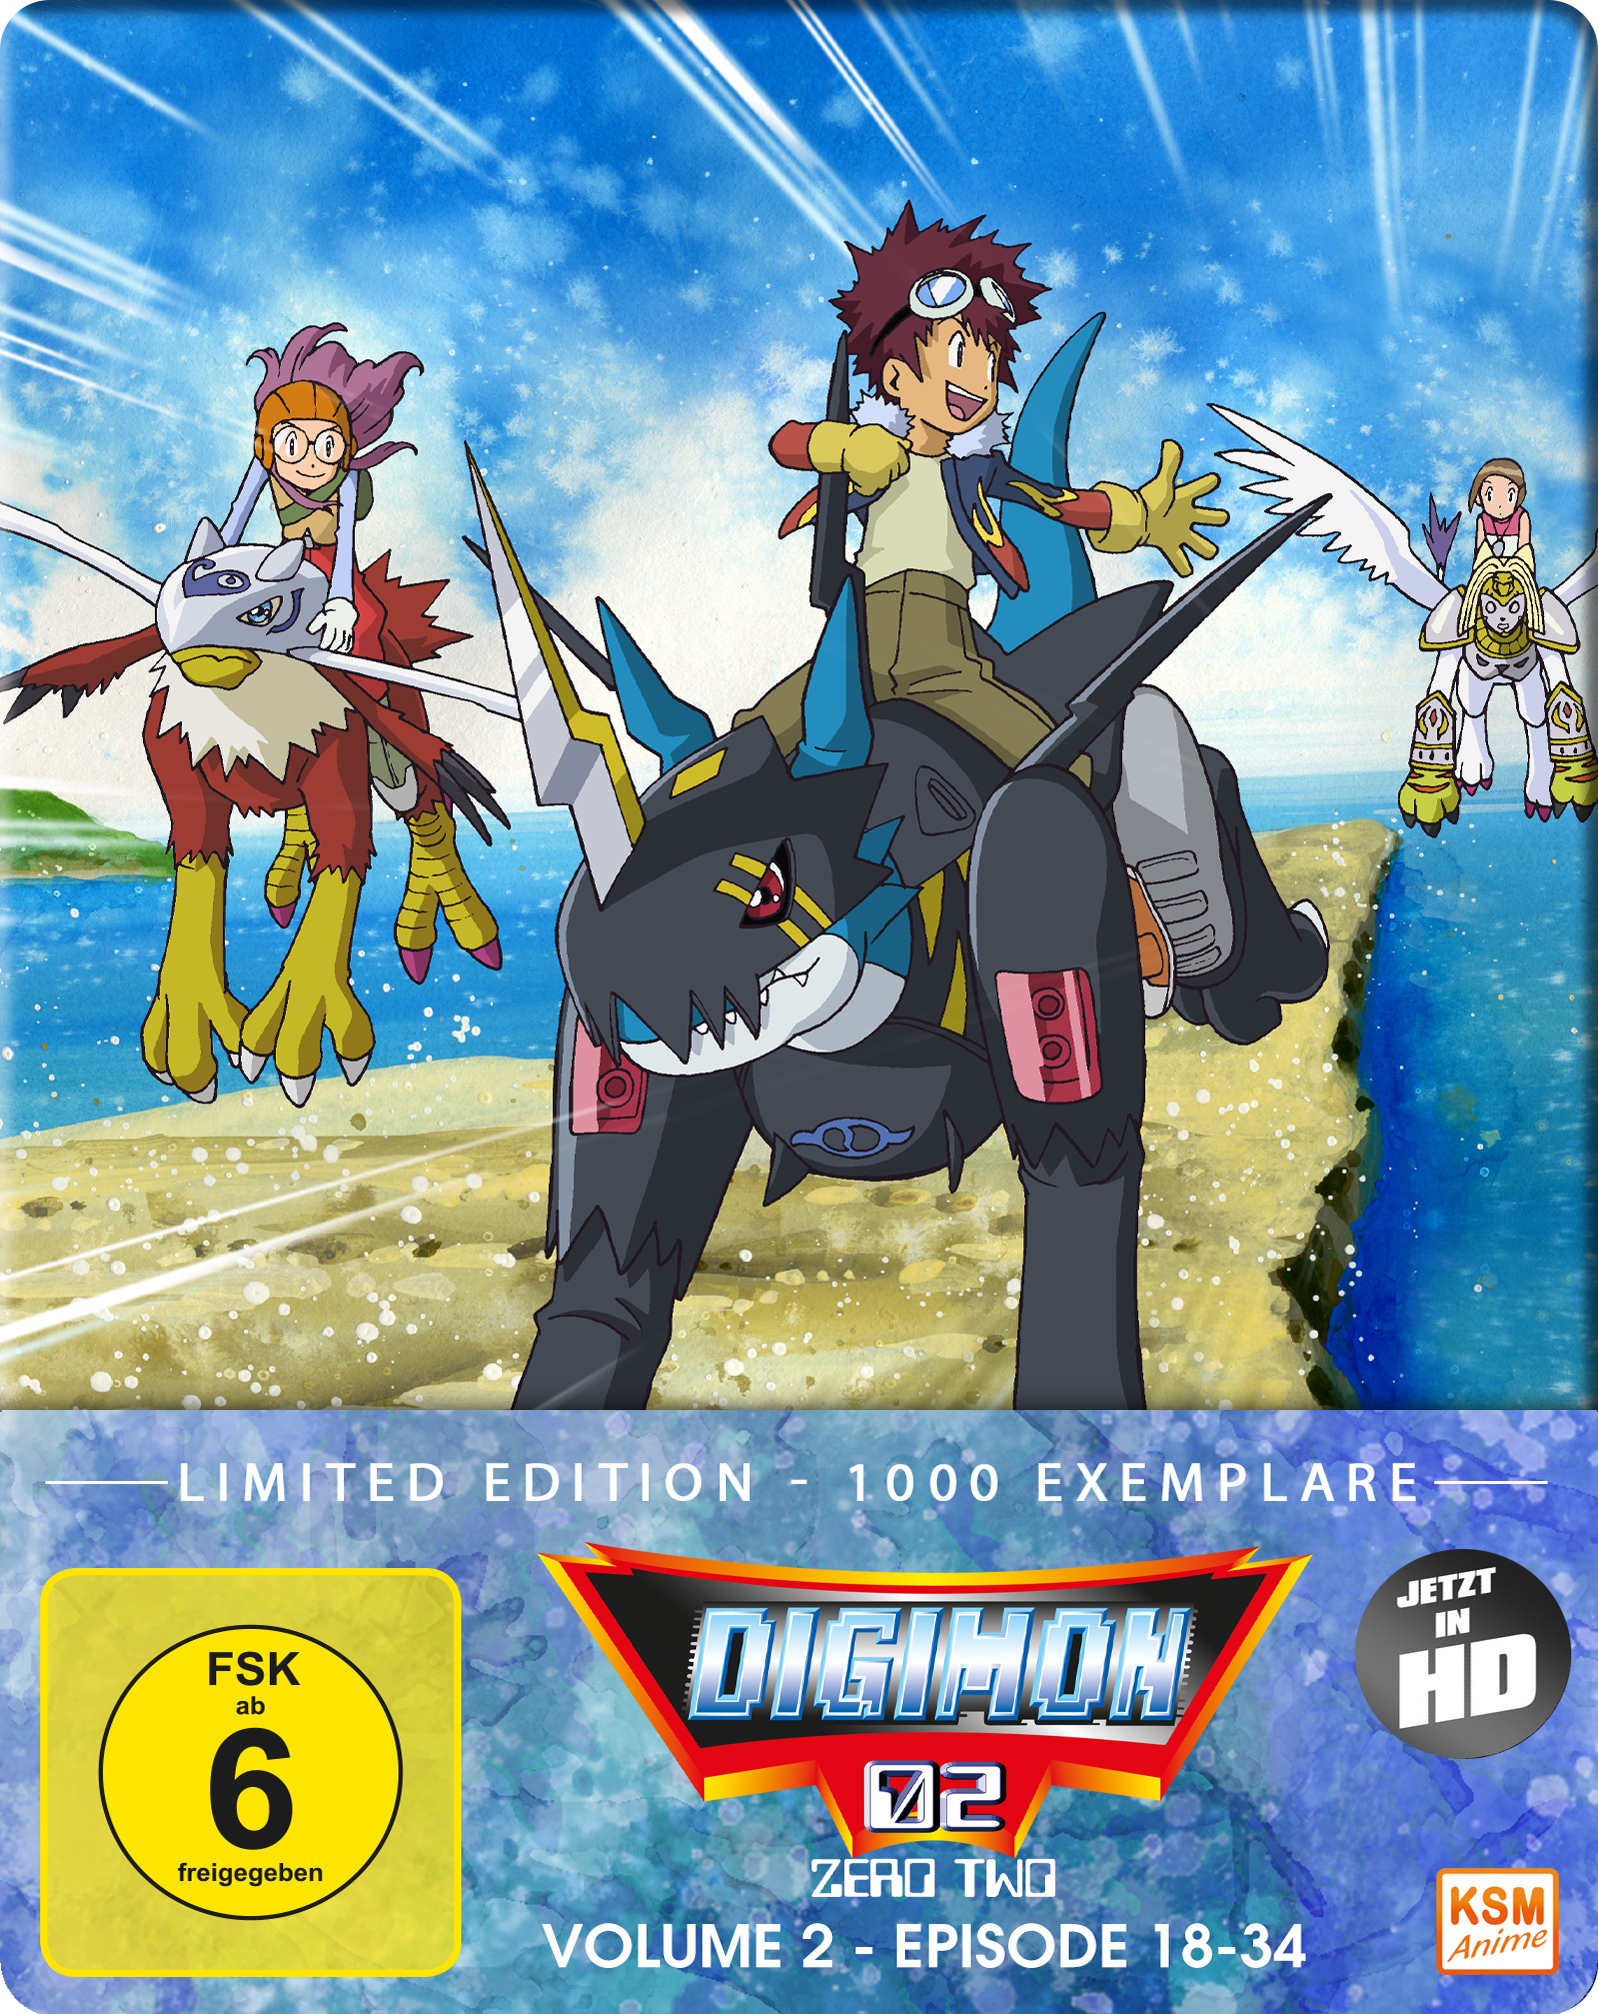 Digimon Adventure 02 - Volume 2 - Limited Edition: Episode 18-34 im FuturePak [Blu-ray] Cover